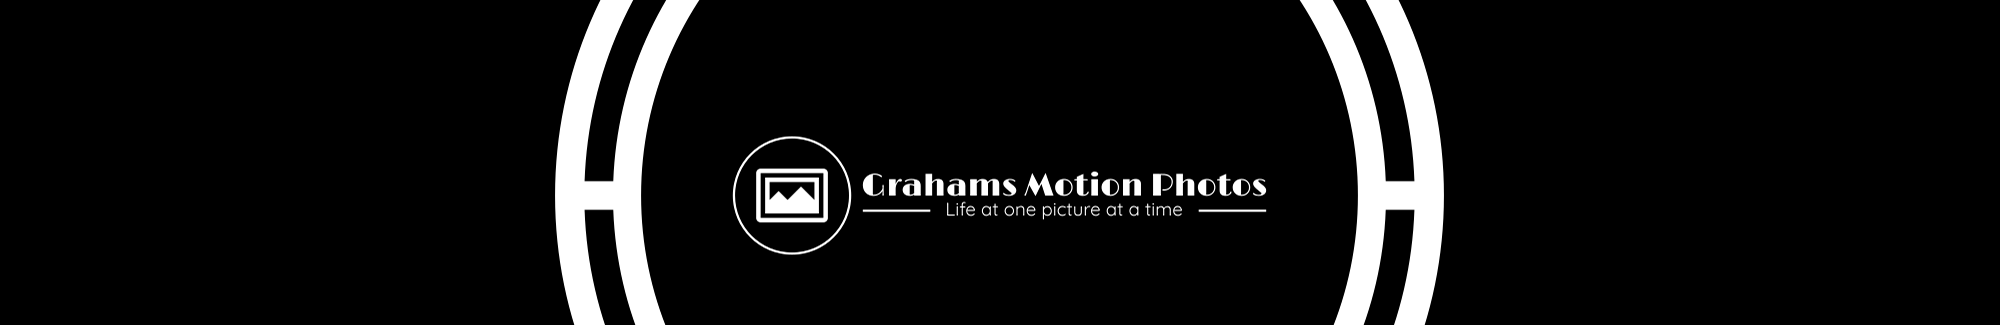 Banner de perfil de Graham Little